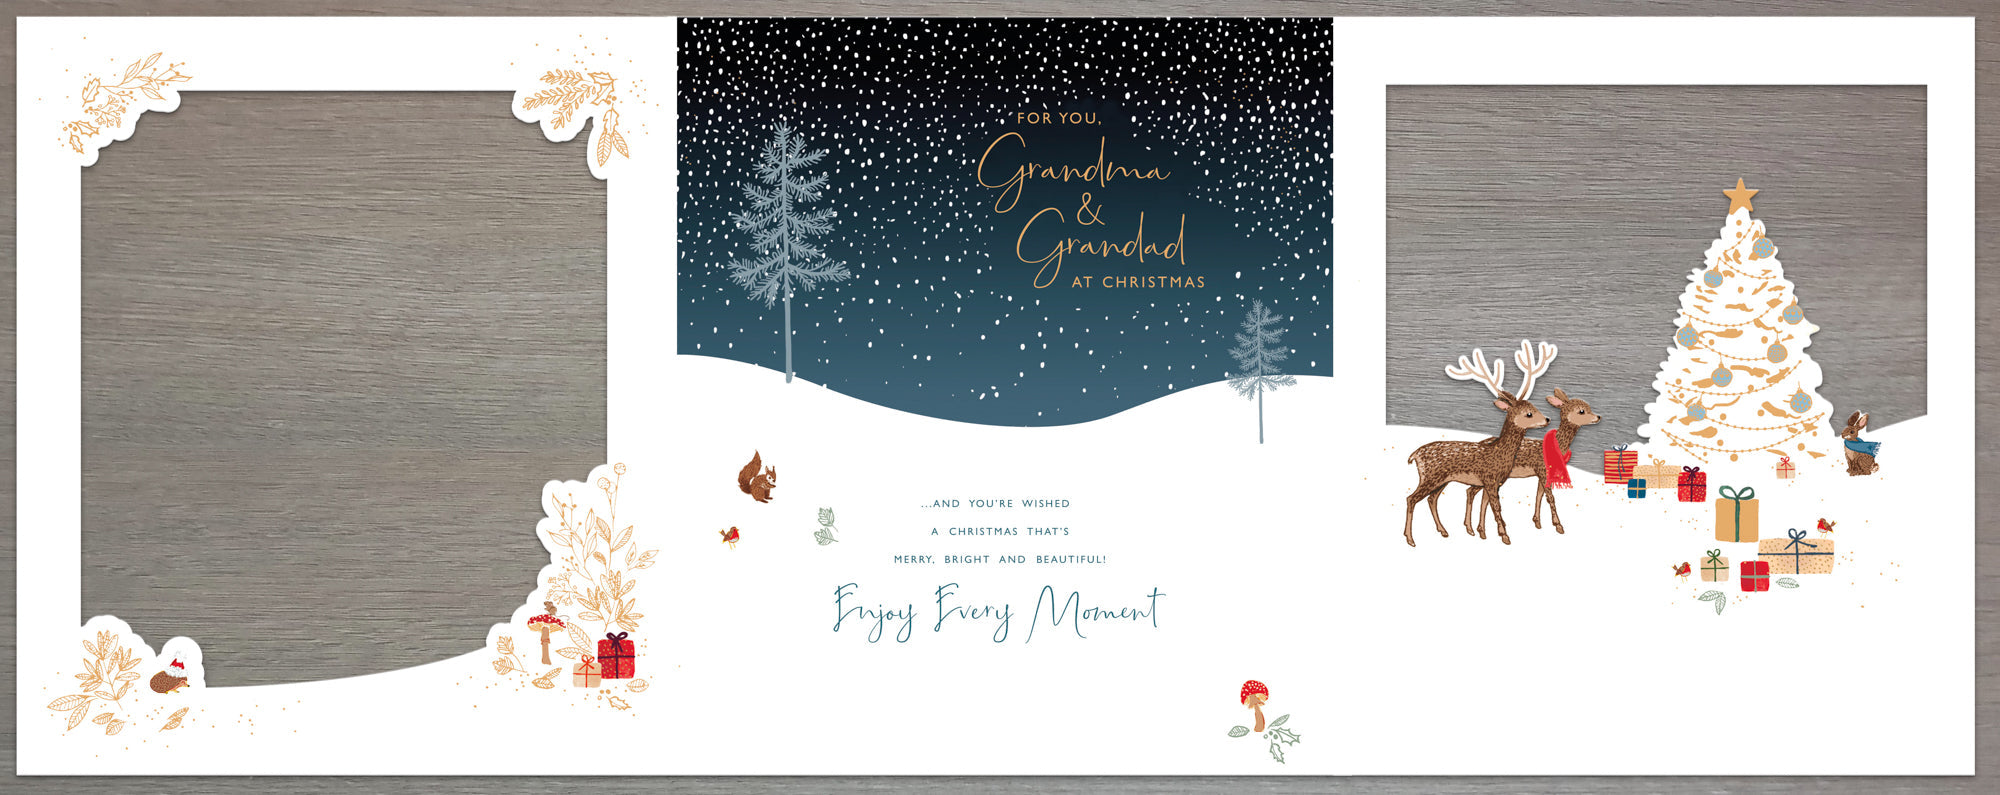 Grandma And Grandad Christmas Card